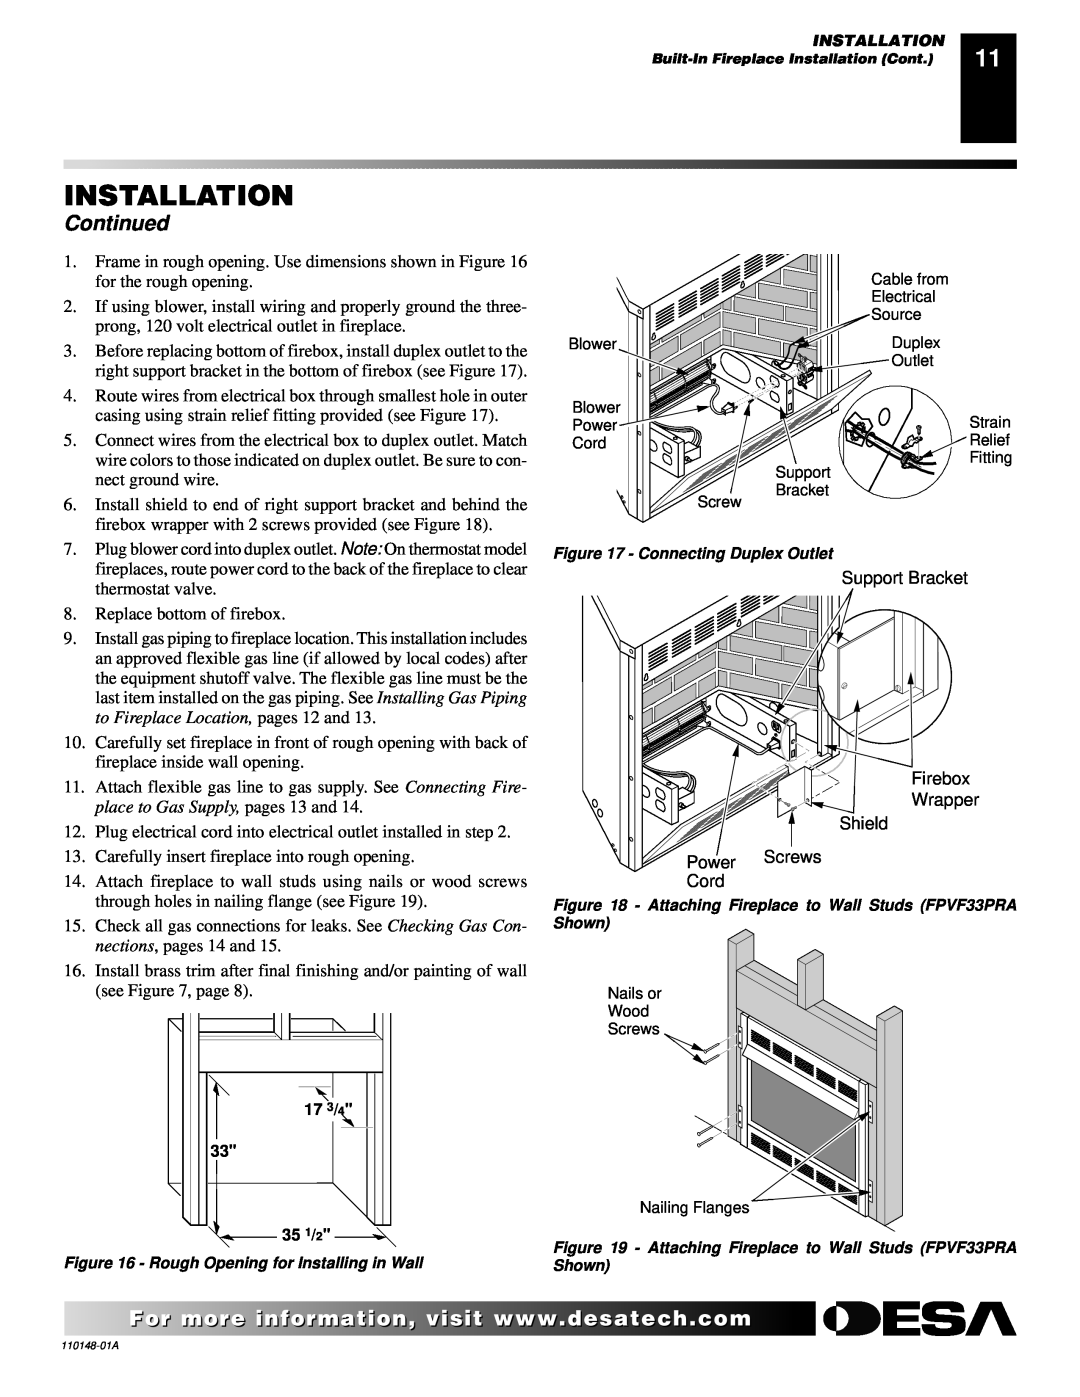 Desa VYGF33PRB, VYGF33NRB, FPVF33PRA, FPVF33NRA installation manual Installation, Continued, Replace bottom of firebox 